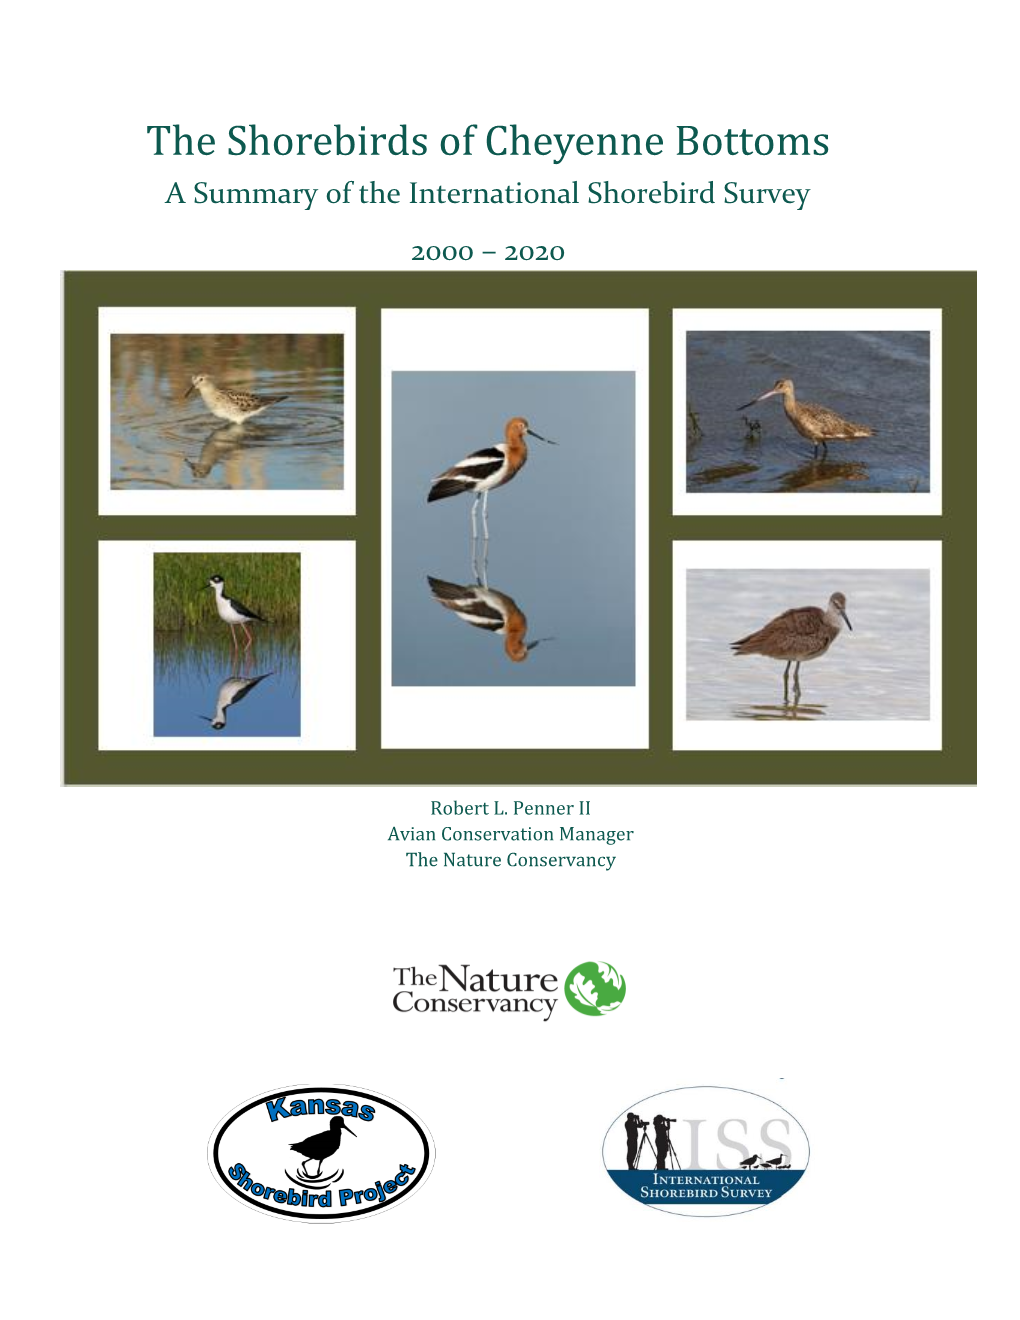 The Shorebirds of Cheyenne Bottoms a Summary of the International Shorebird Survey 2000 – 2020